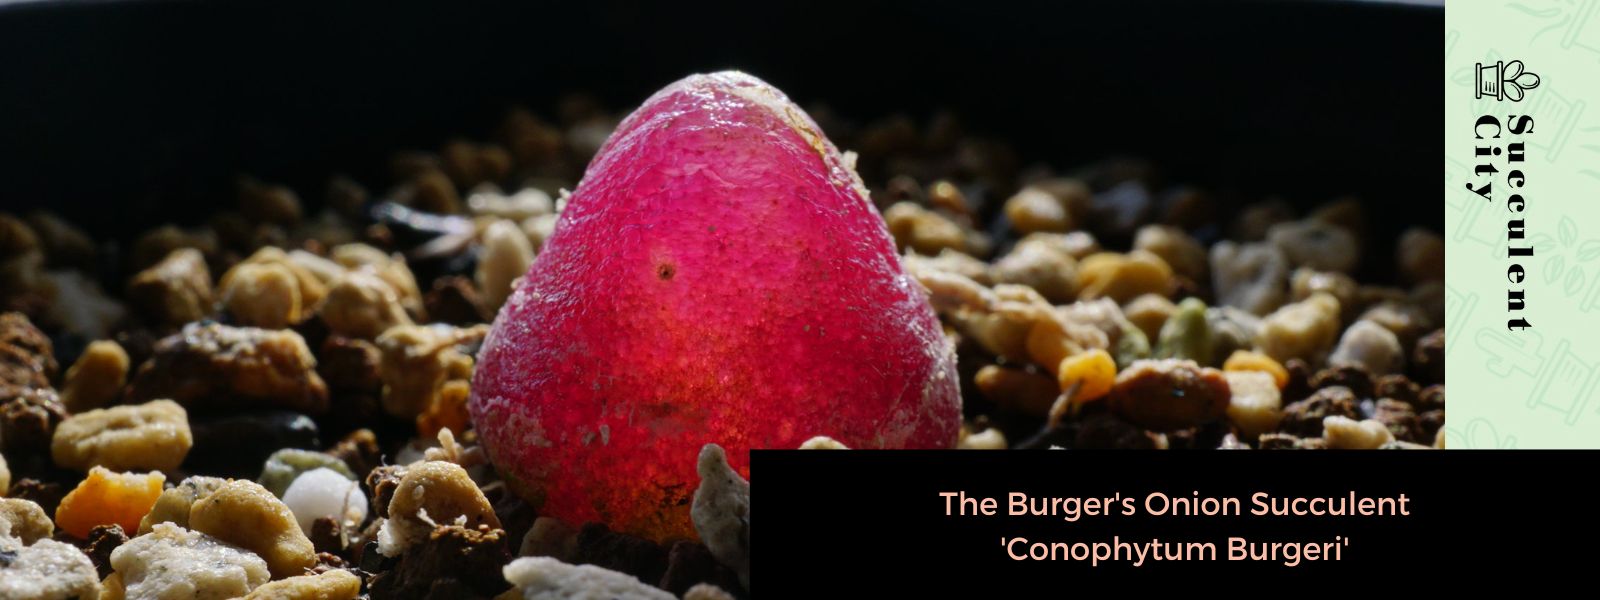 La hamburguesa de cebolla suculenta 'Conophytum Burgeri'